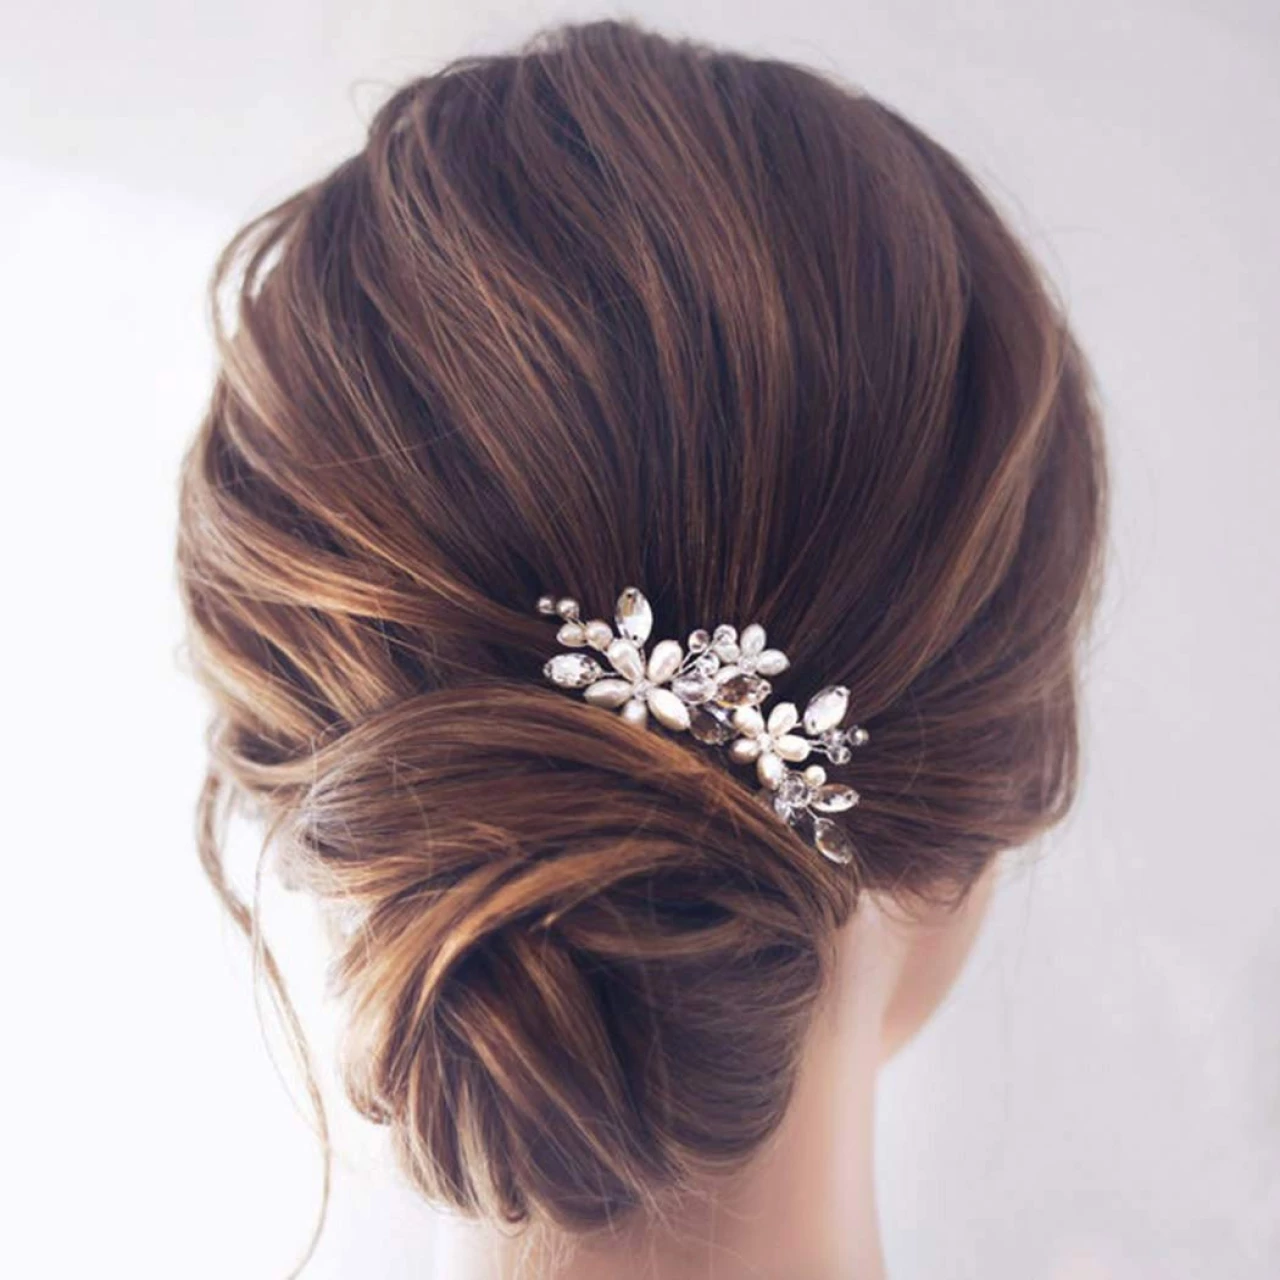 Jakawin Bride Wedding Pearl Hair Pins Flower Hair Piece Rhinestone Bridal Hair Accessories for Women HP065 (Silver)